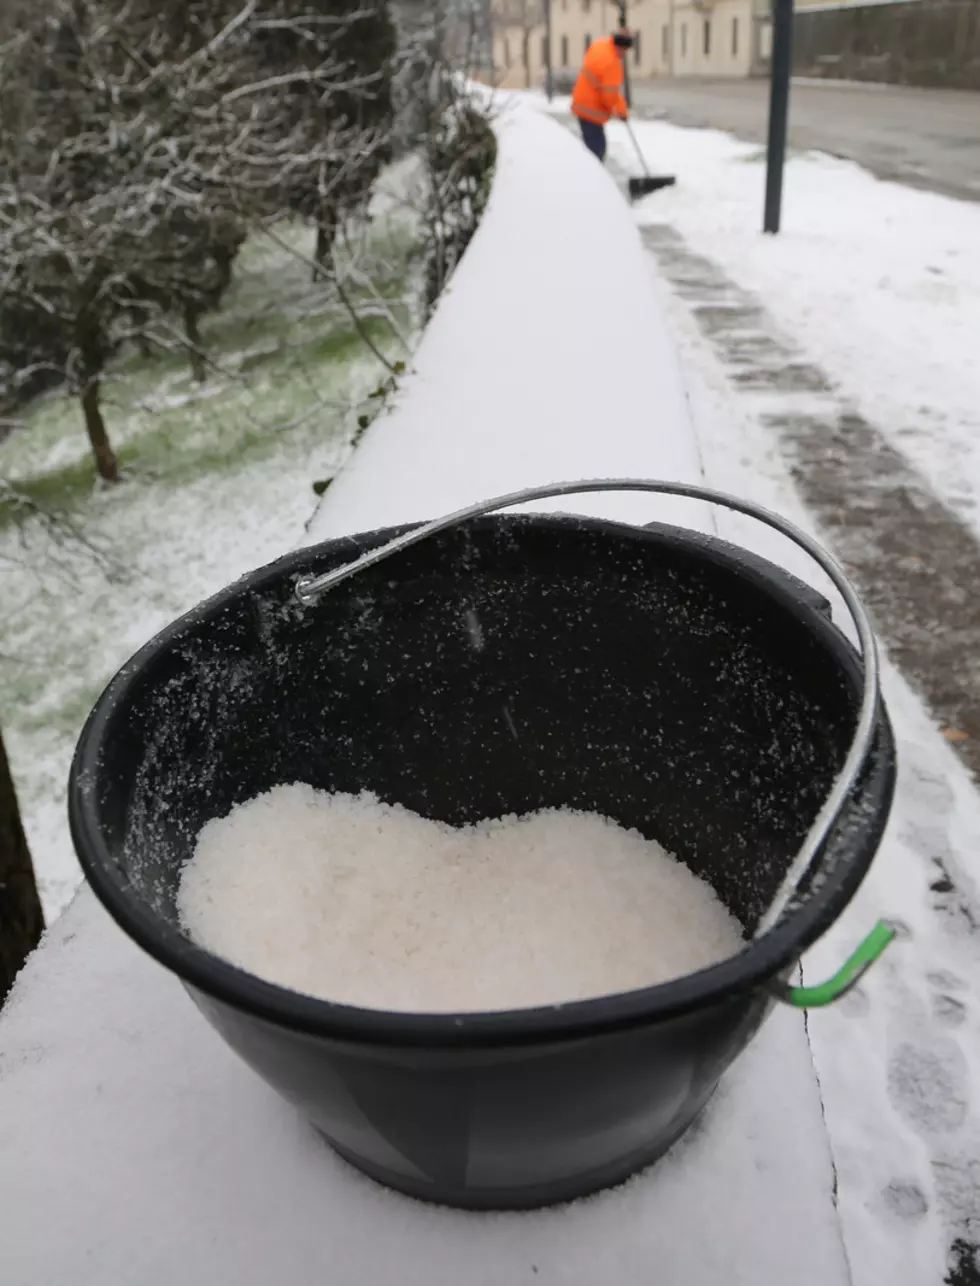 Seven Better Ways to Melt That Winter Snow & Ice Than Salt